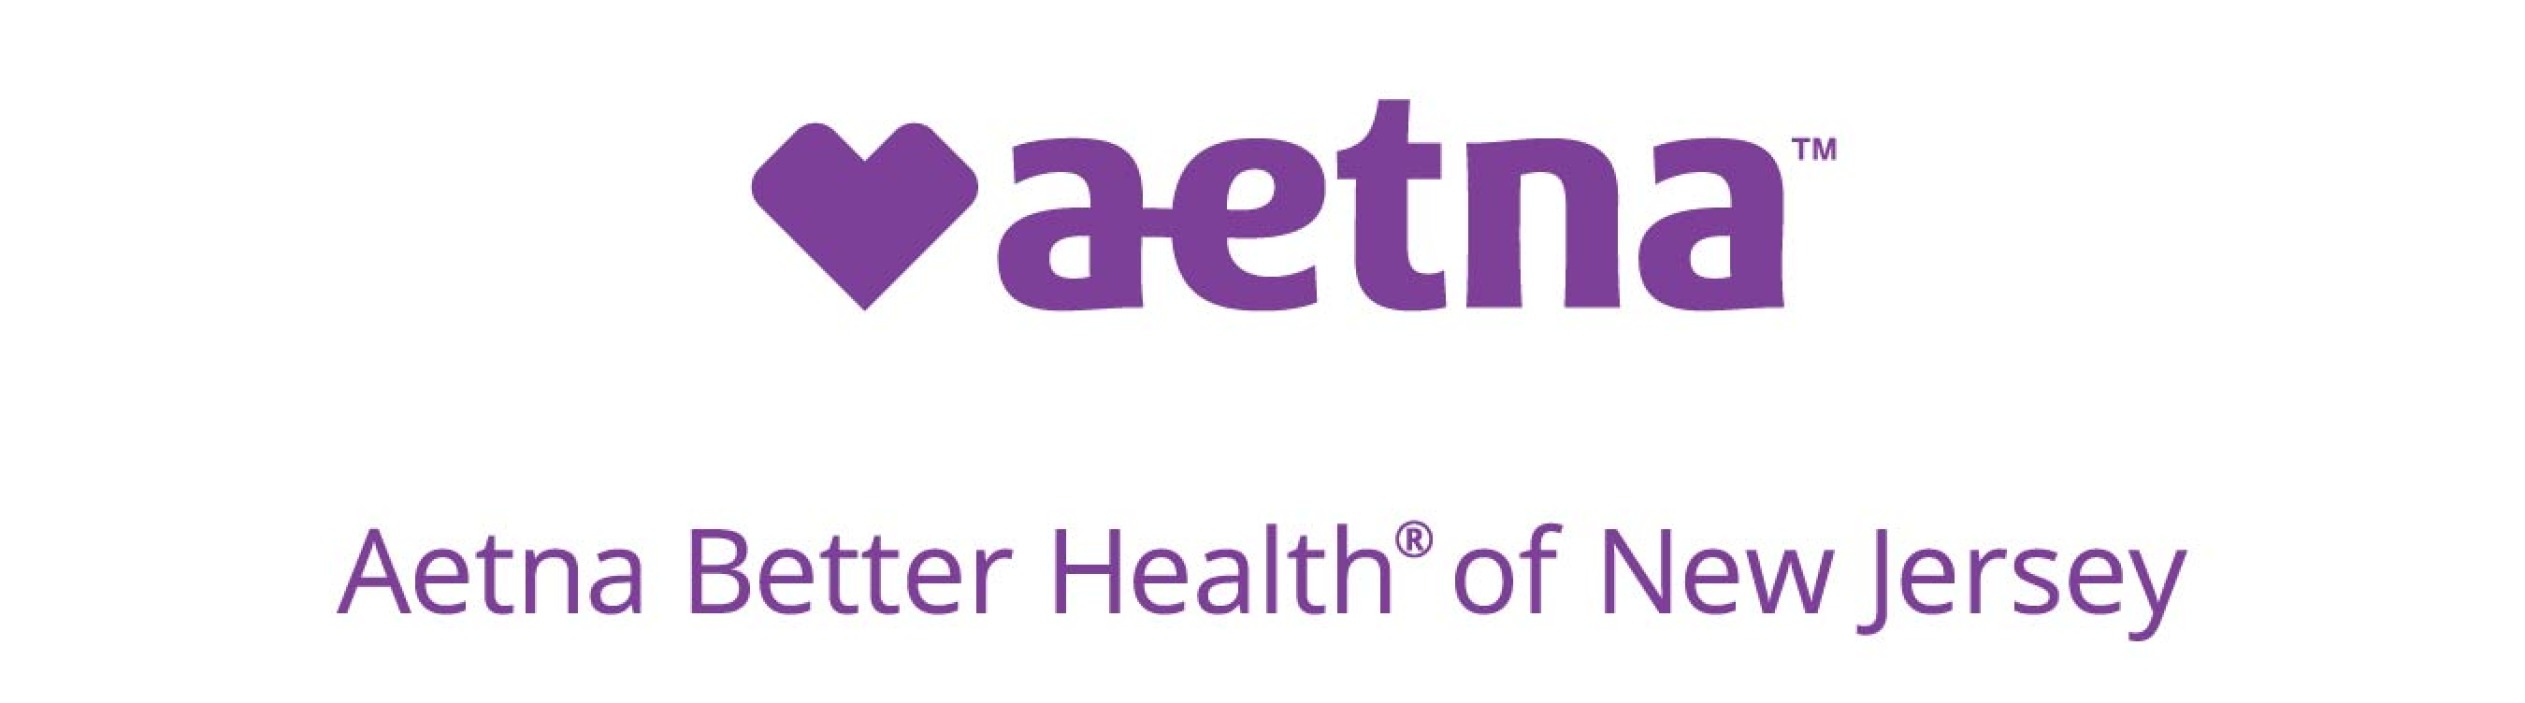 Aetna better health of nj or amerigroup cognizant software development